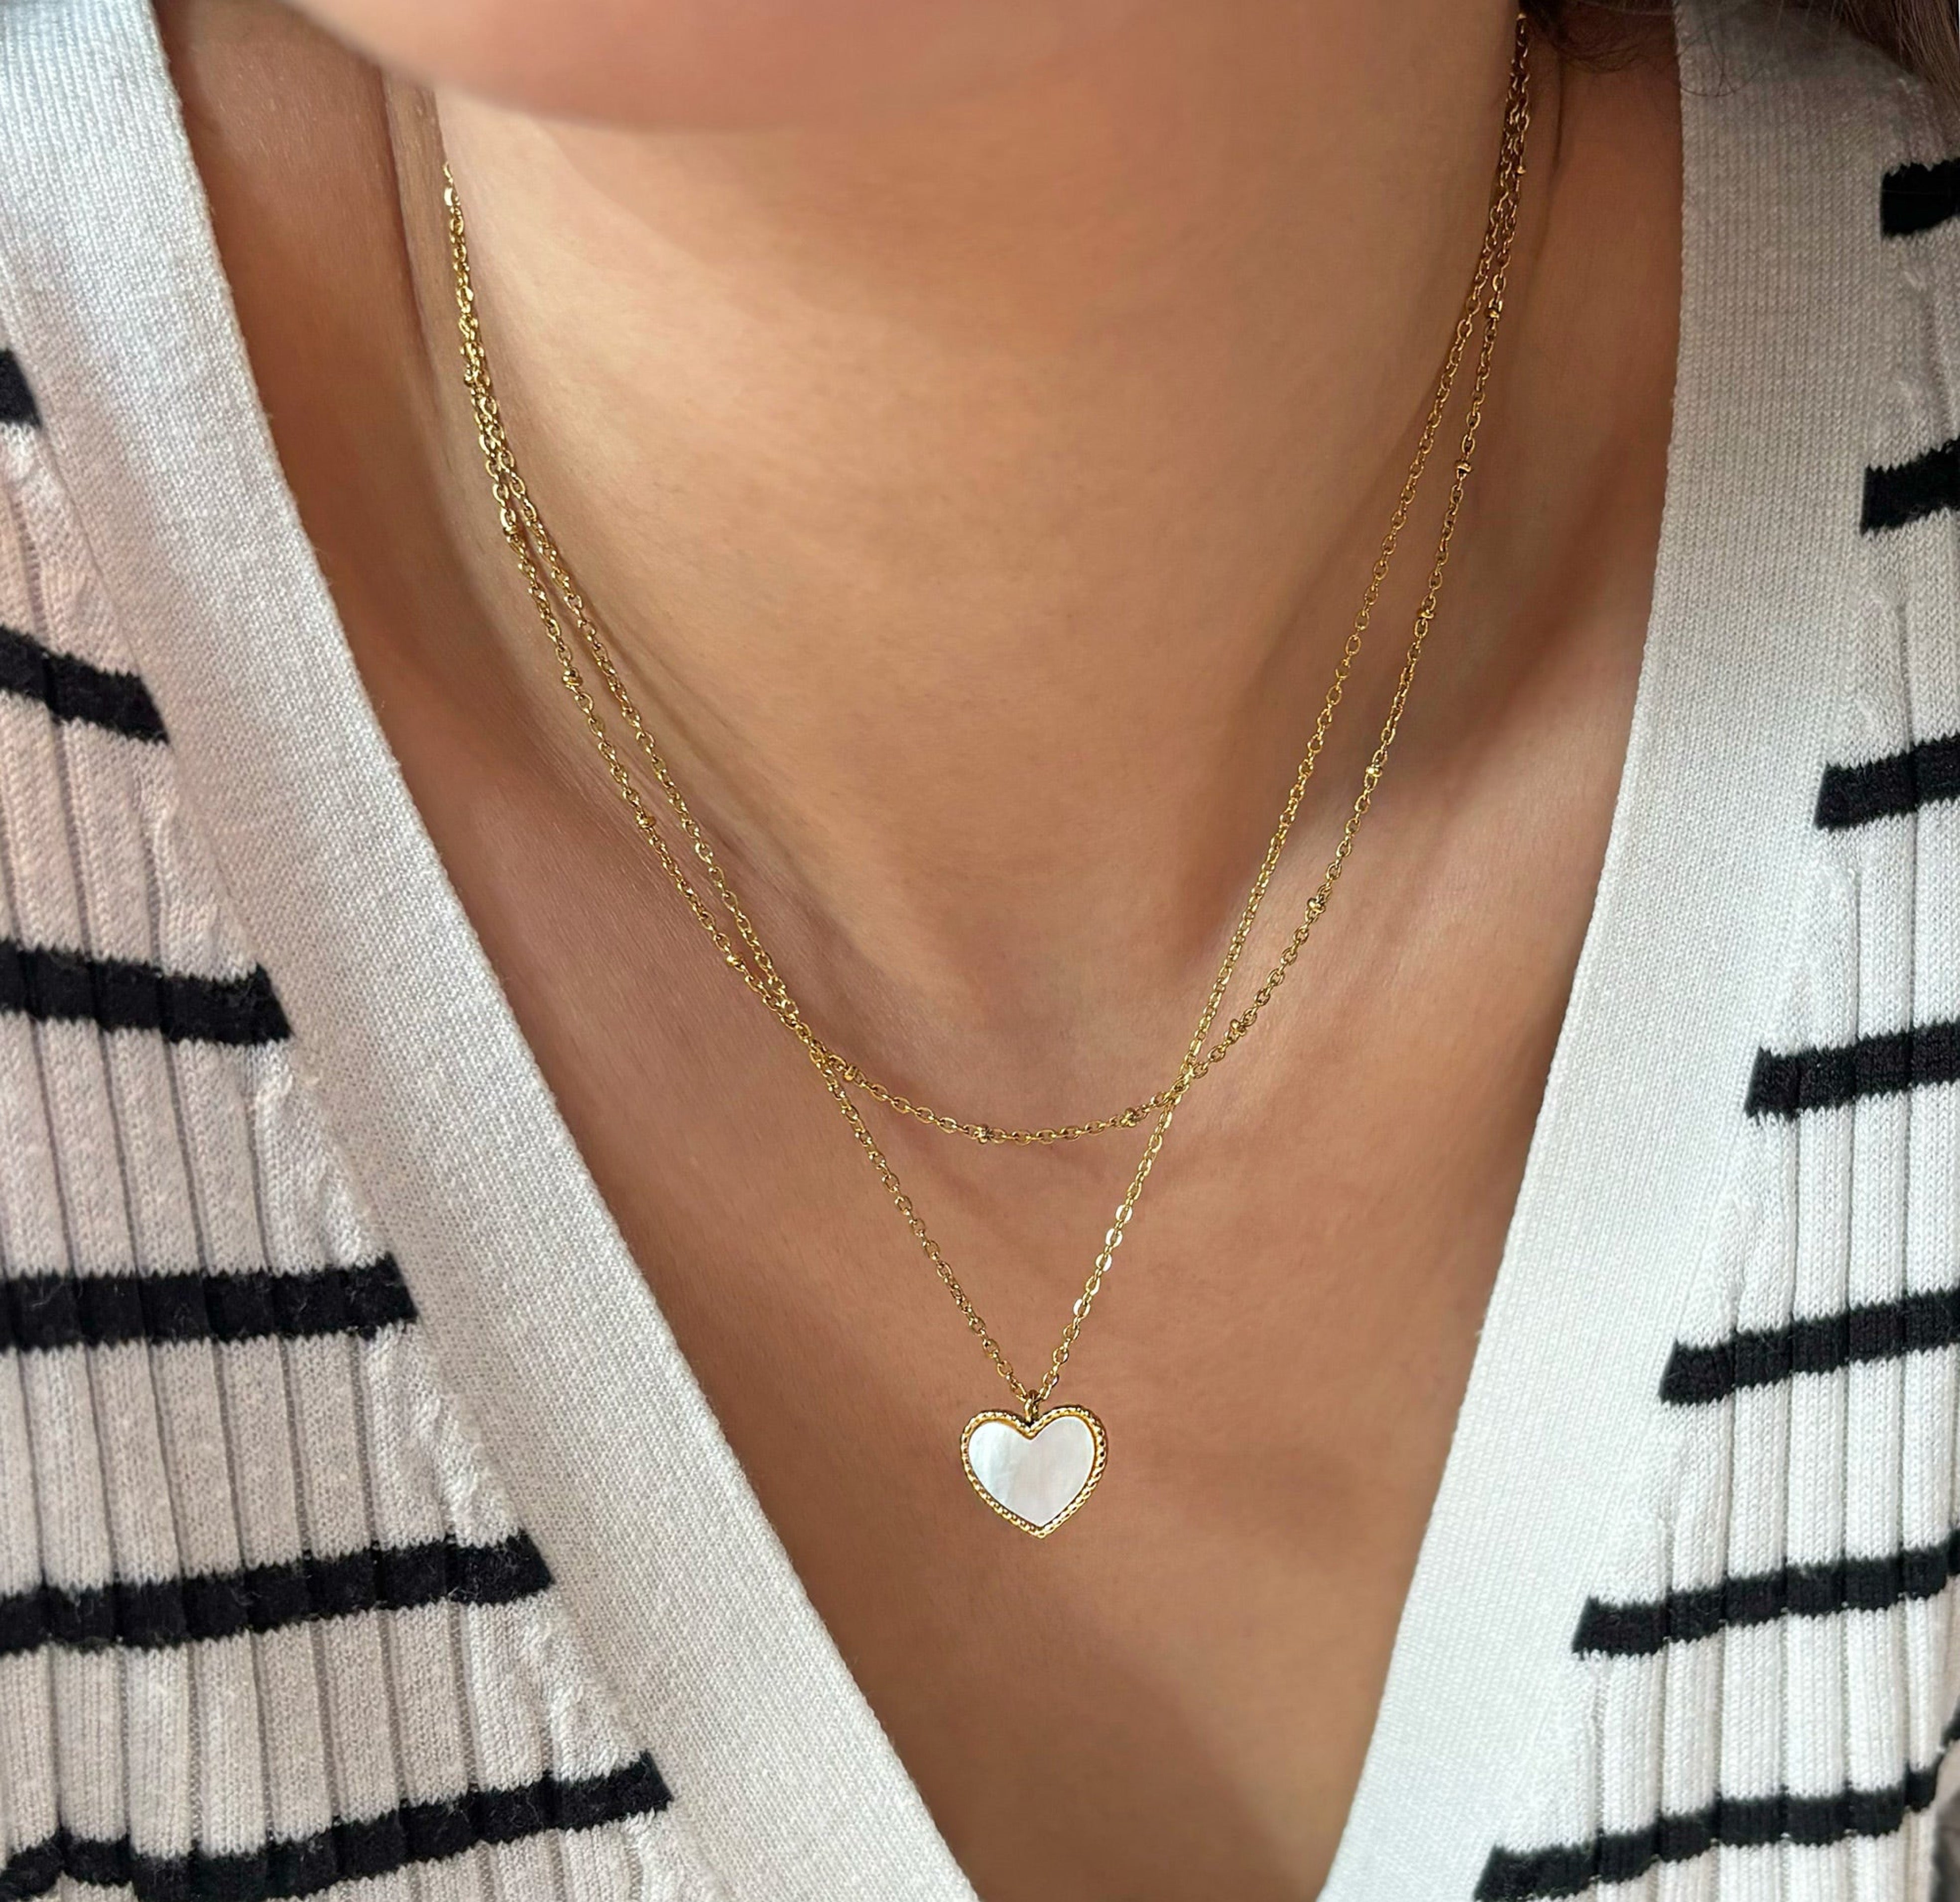 gold heart shell pendant necklace waterproof jewelry